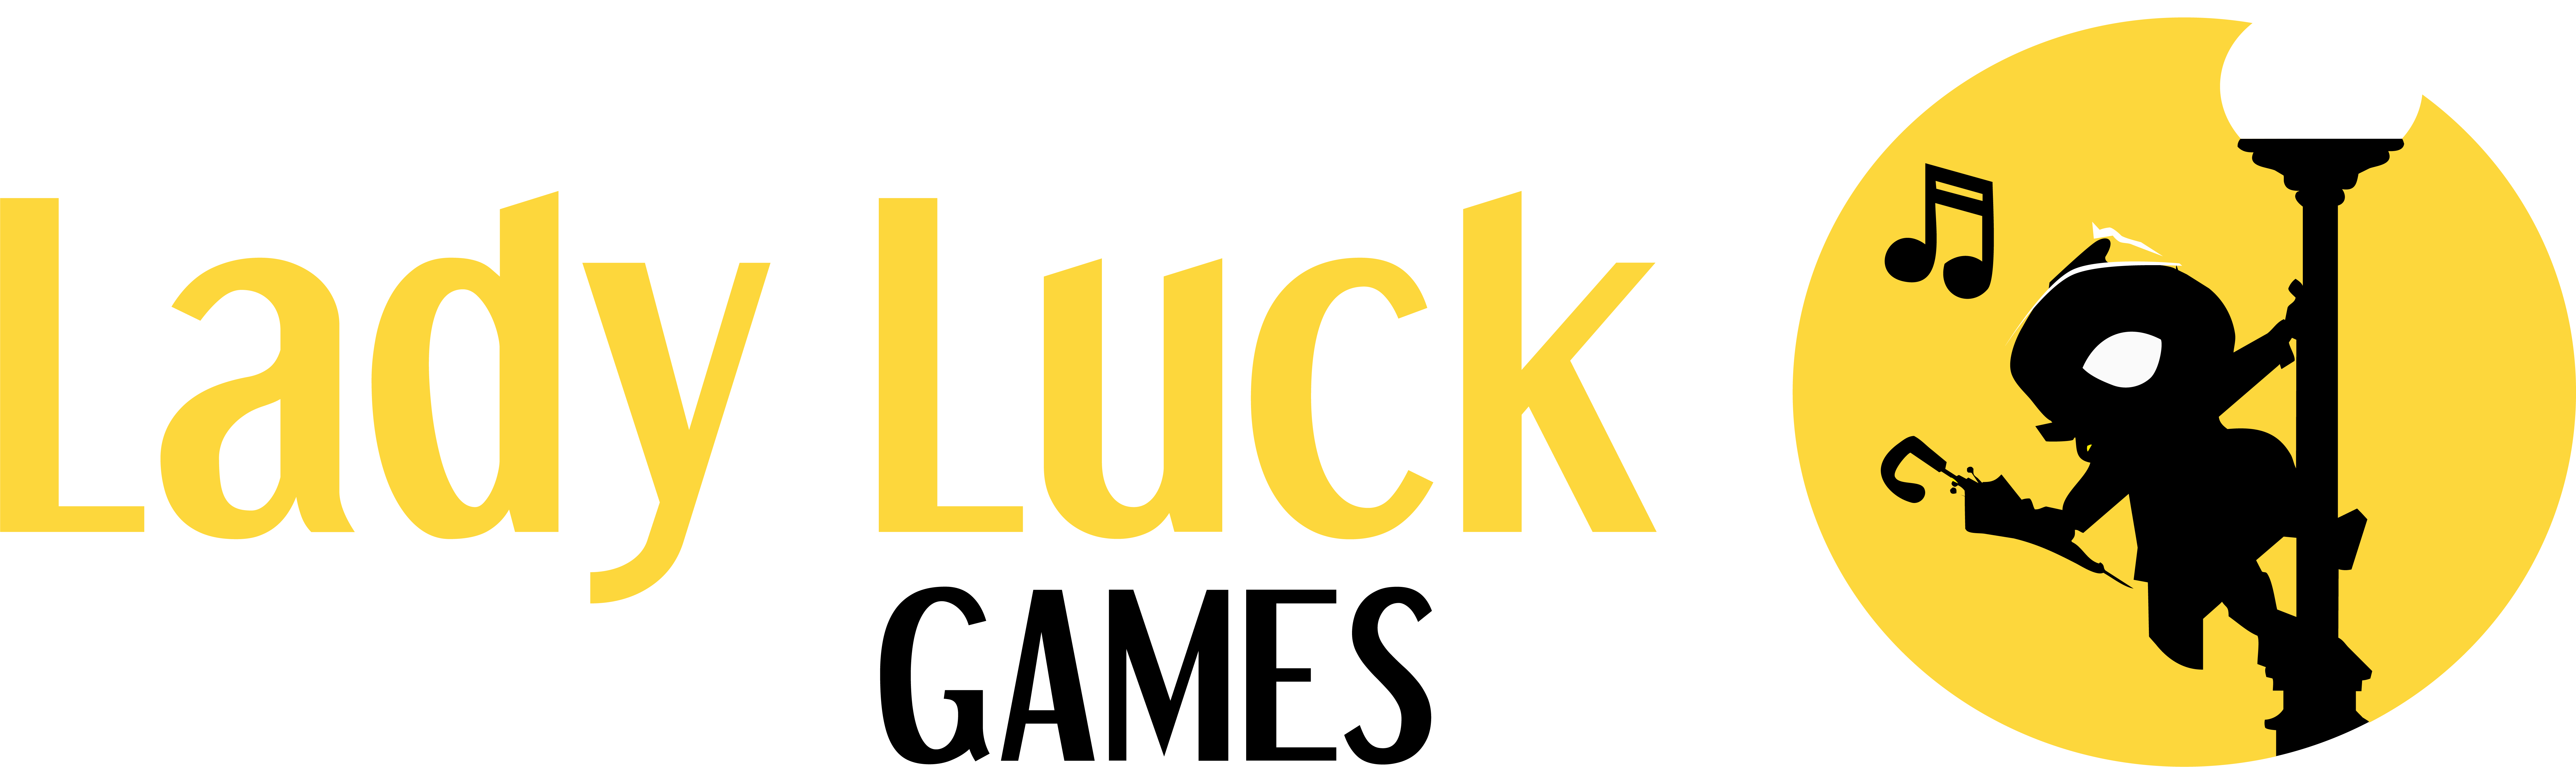 Lady Luck Games गेम्स